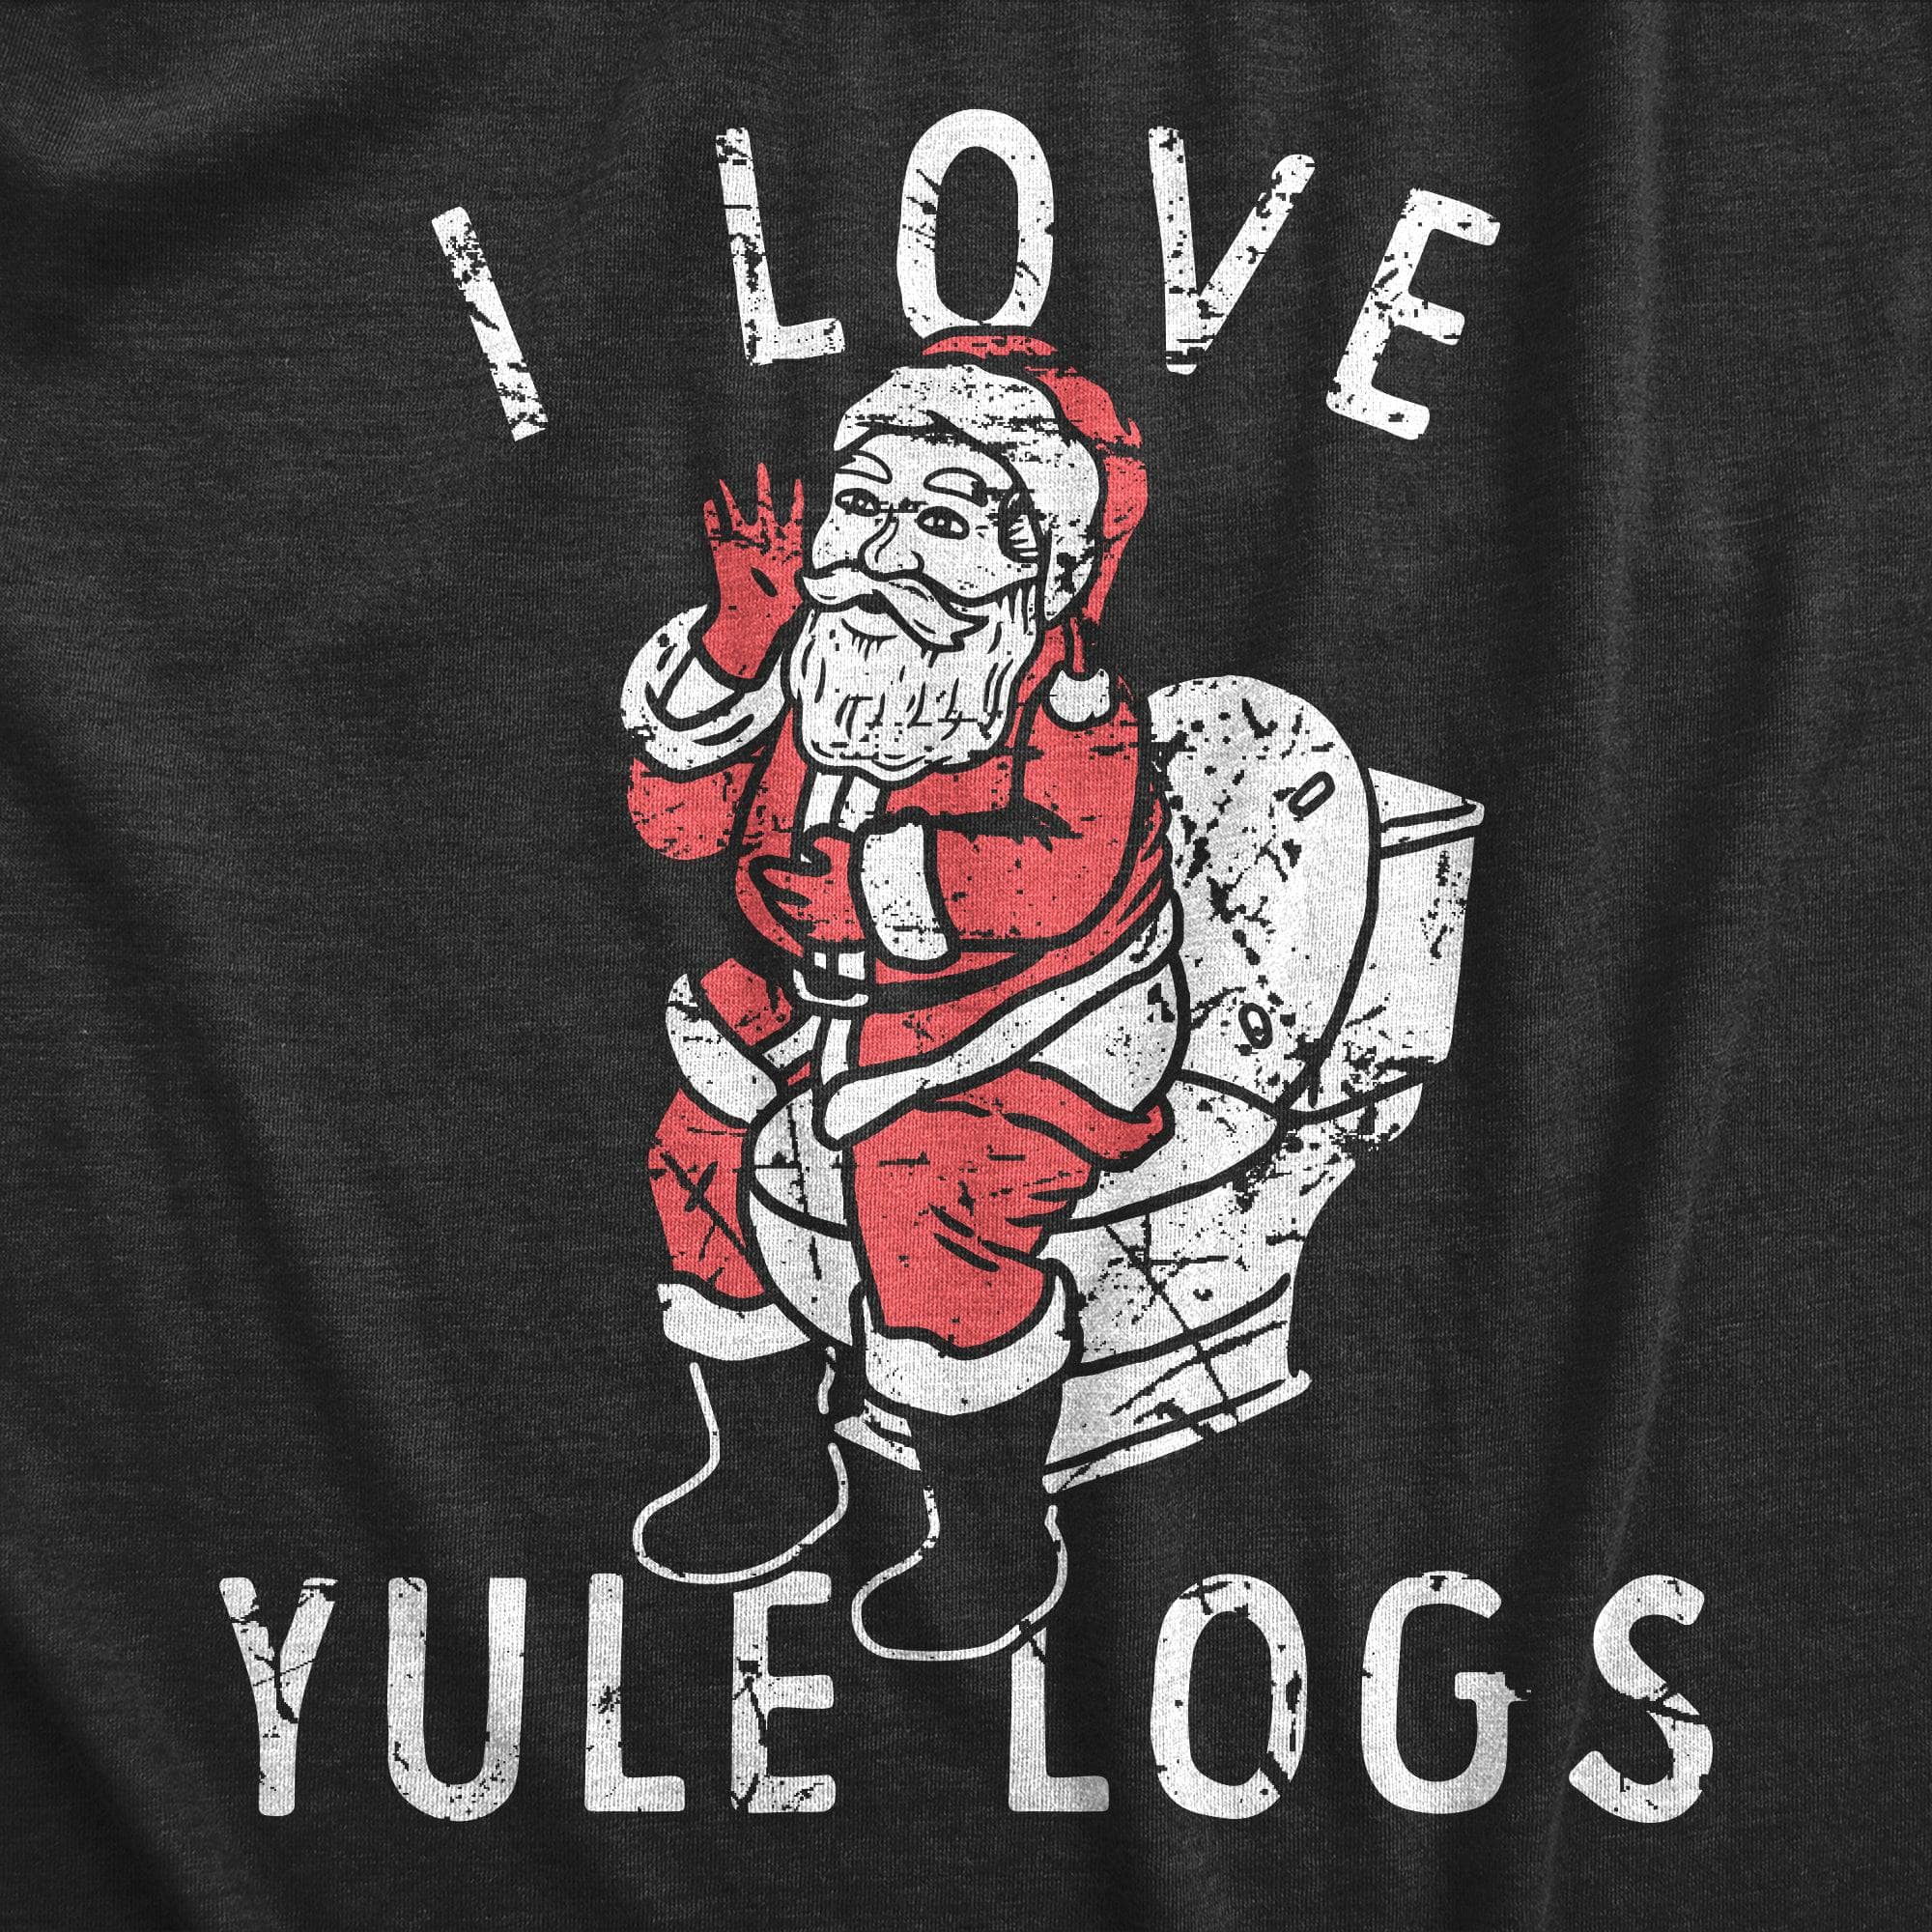 I Love Yule Logs Men's Tshirt  -  Crazy Dog T-Shirts